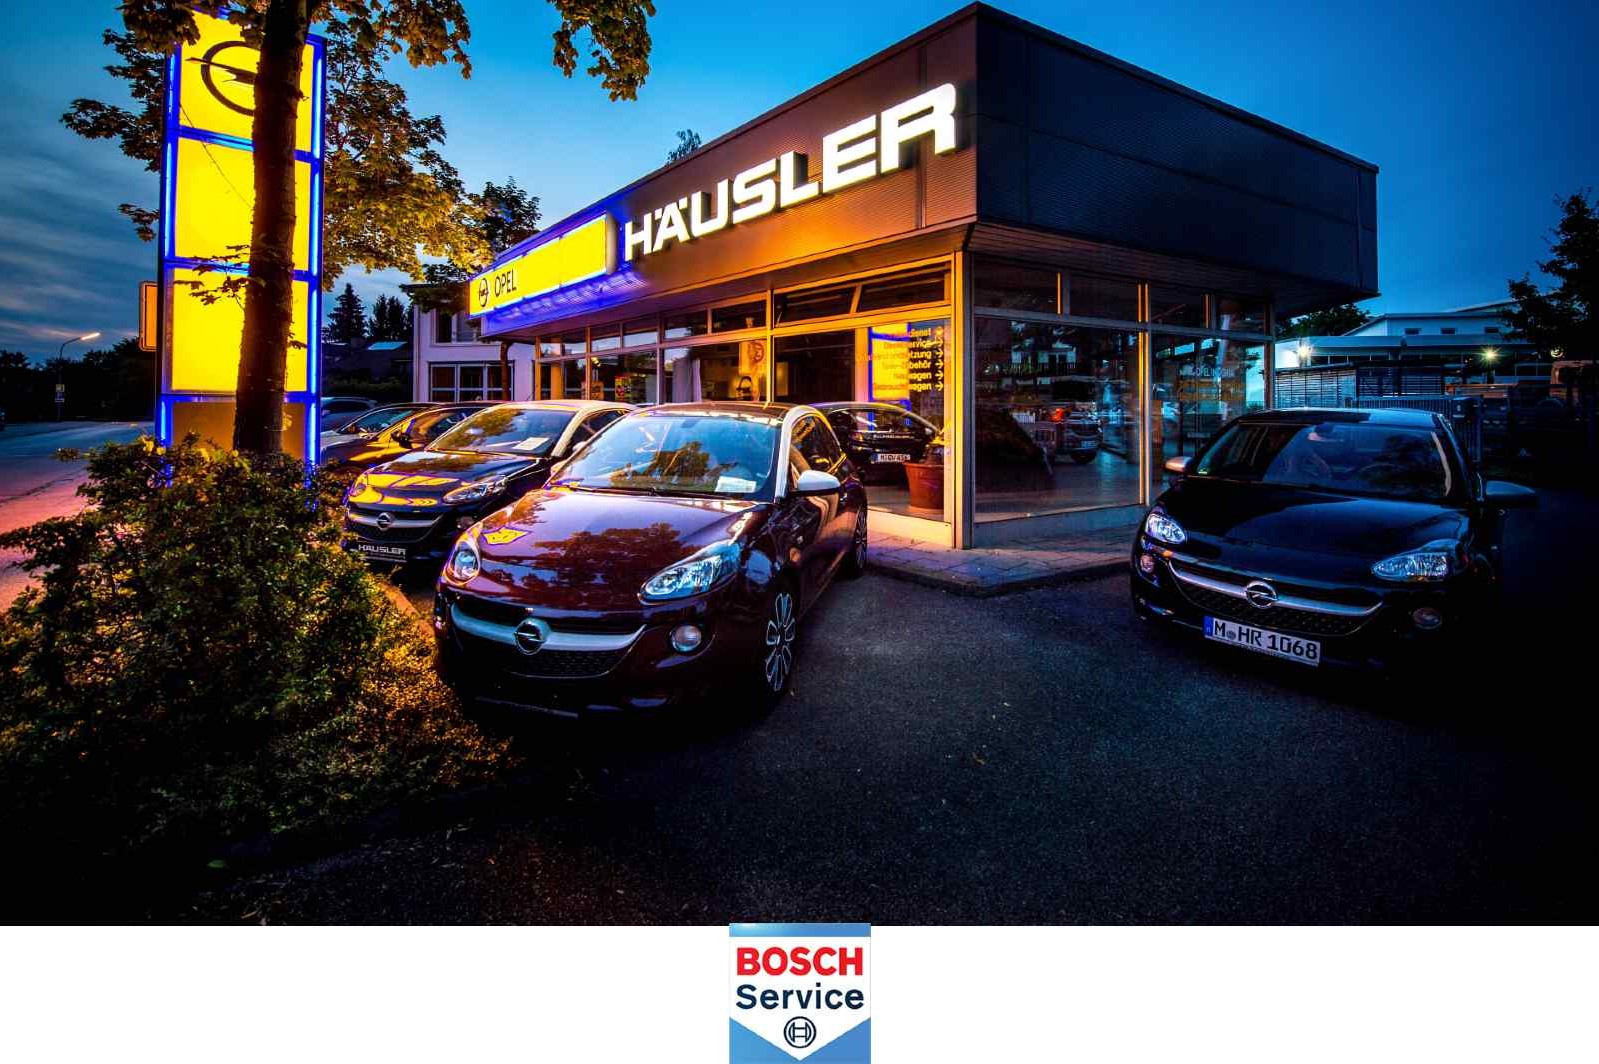 Häusler Automobil Neubiberg - Bosch Car Service